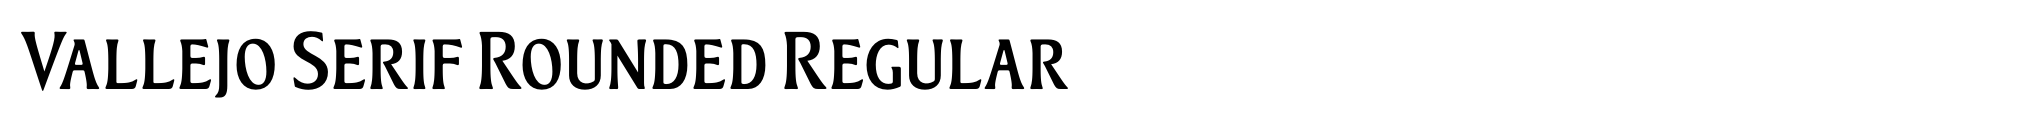 Vallejo Serif Rounded Regular image